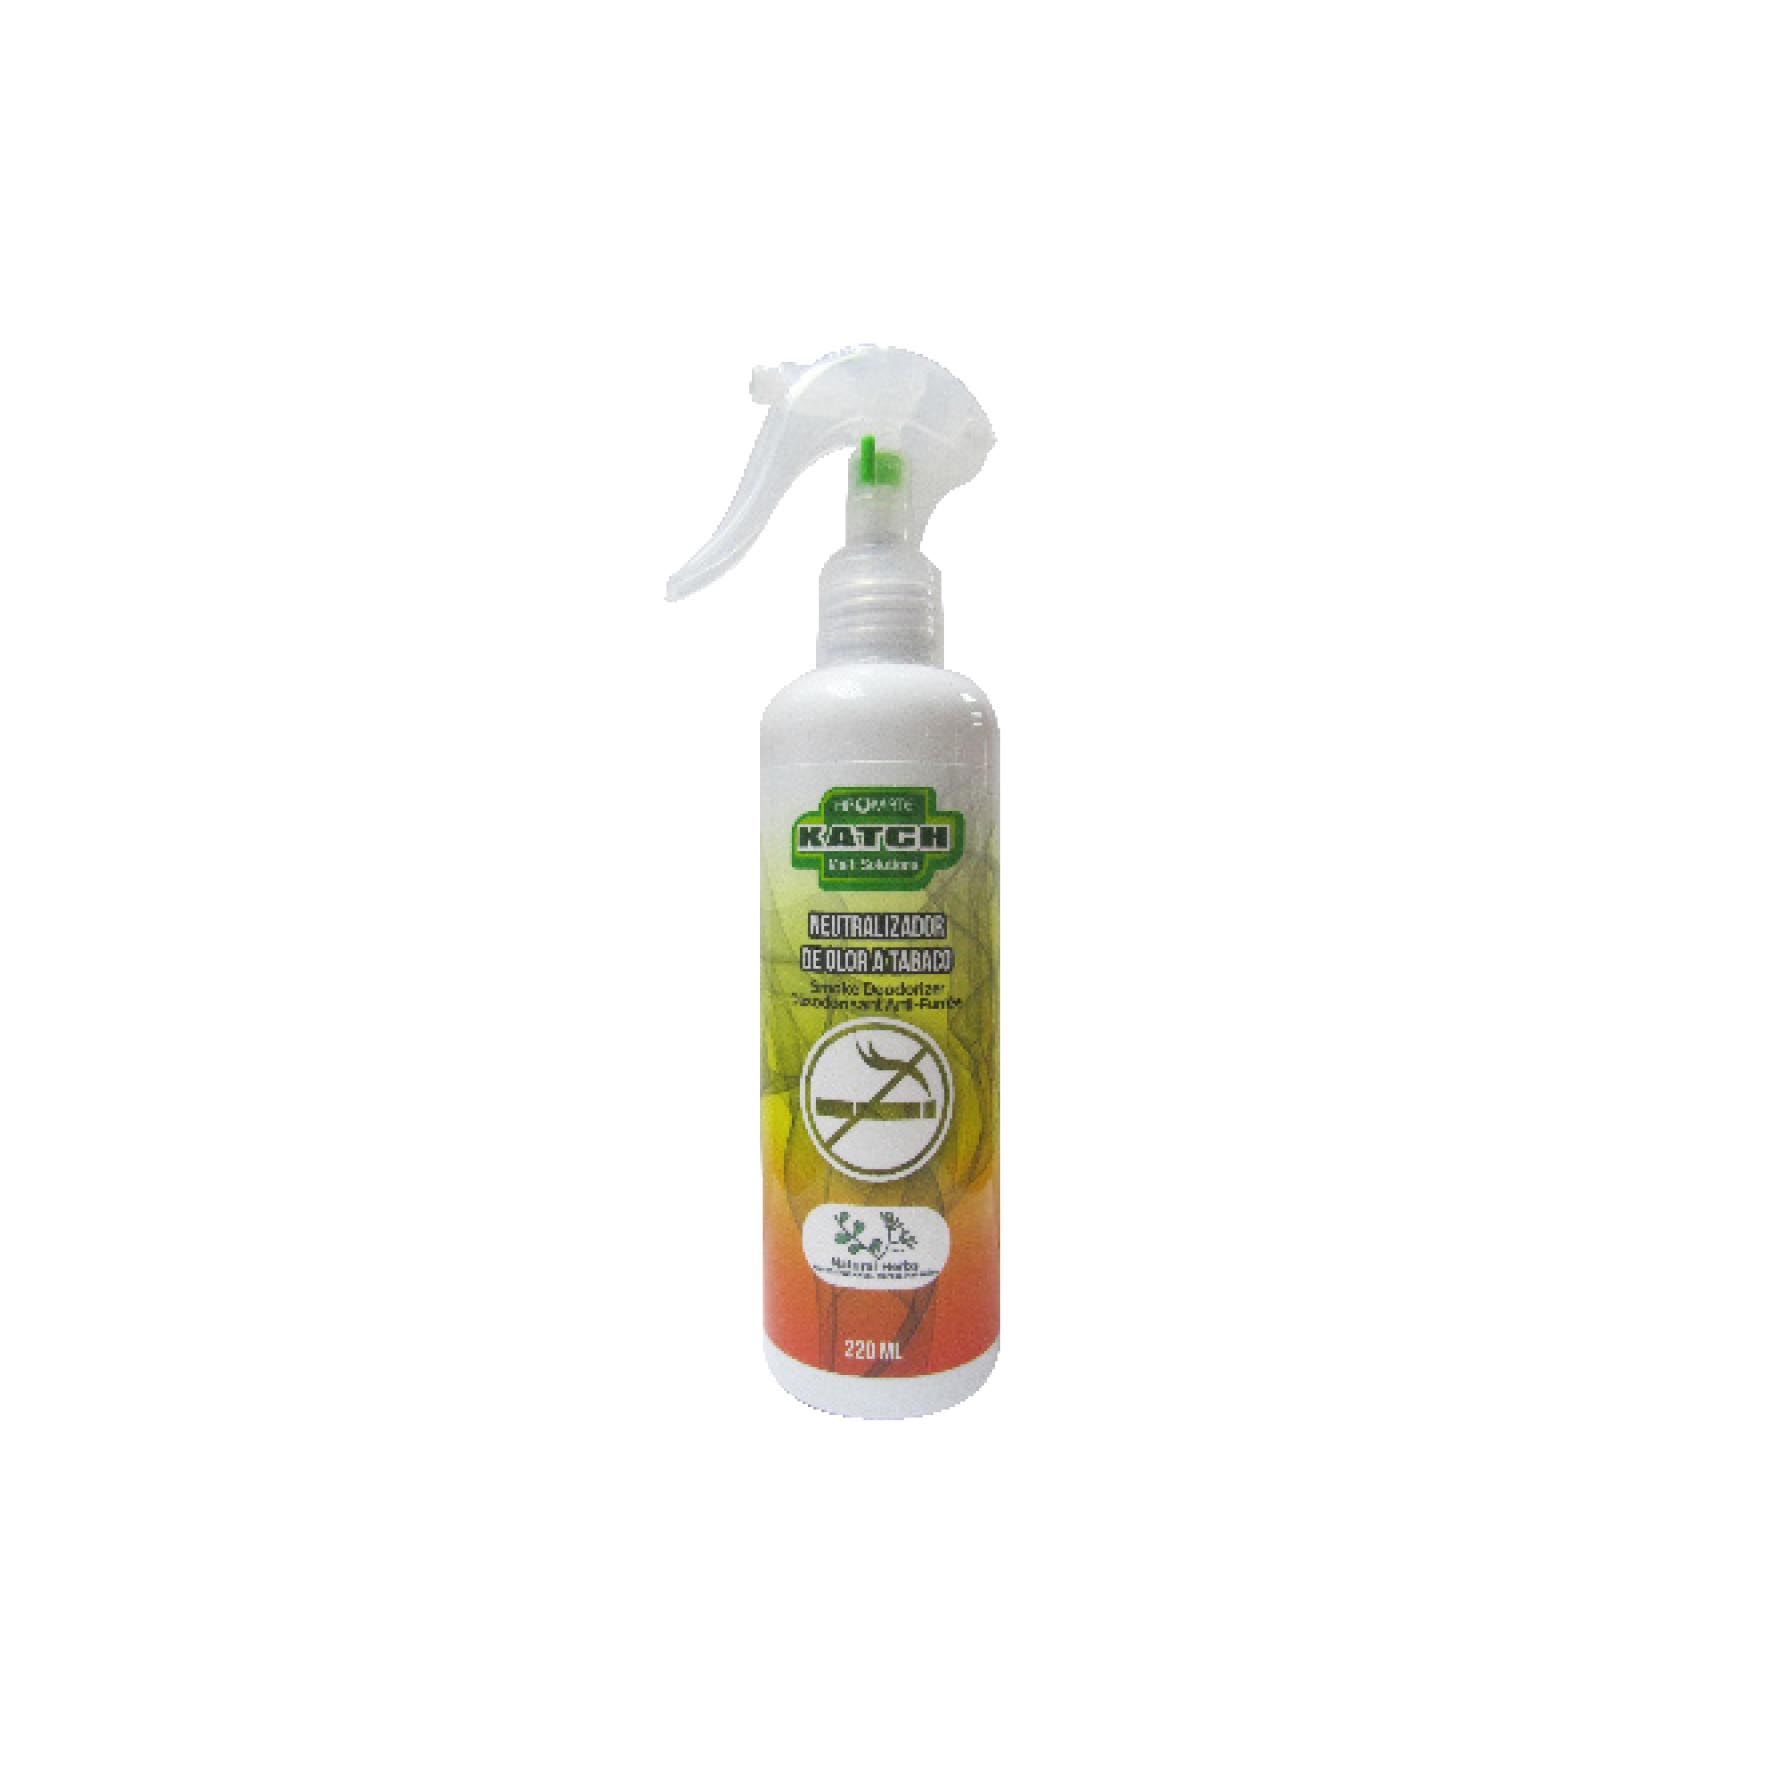 Neutralizador Olores – Higiene Covid19 Aseo Personal Toallas Higiénicas  Desinfectante